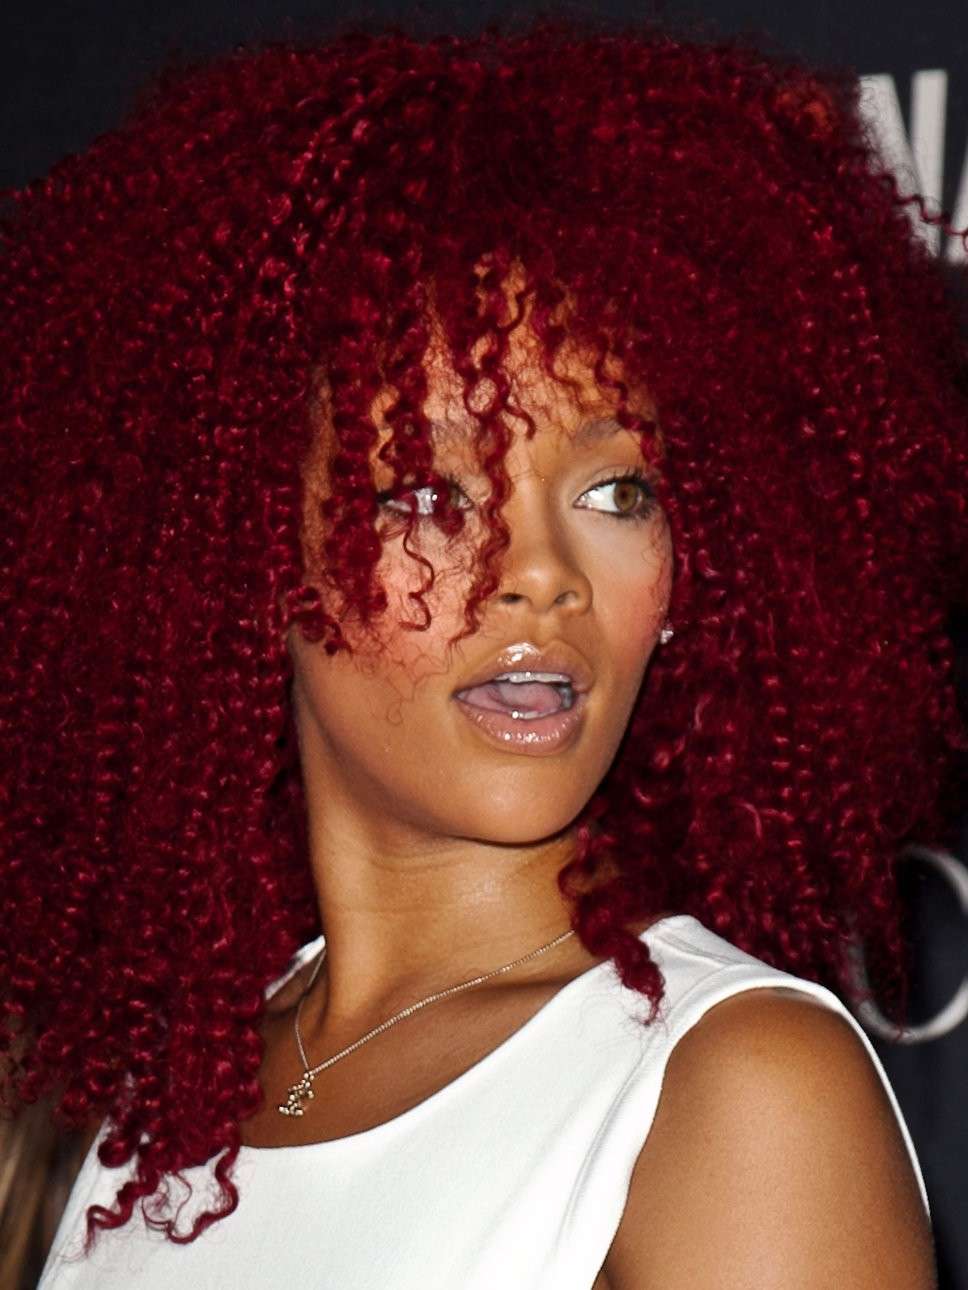 Rihanna ricci rossi